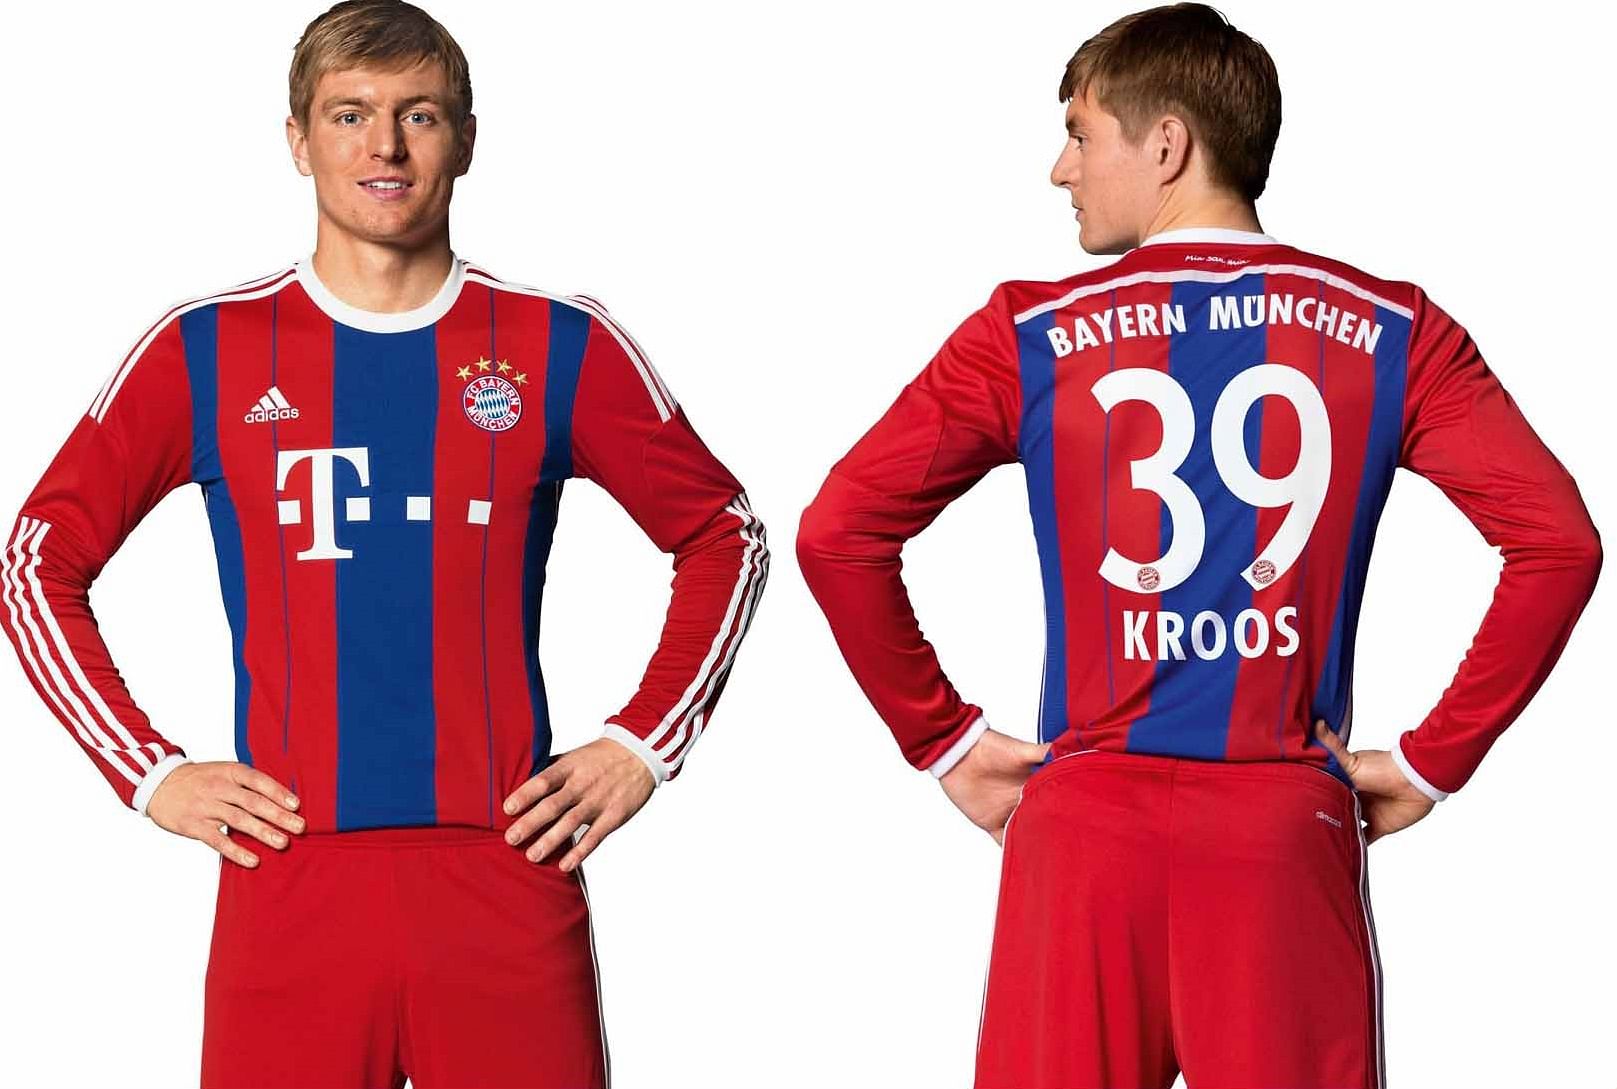 Bayern Munich's new kits for 2014-15 season released